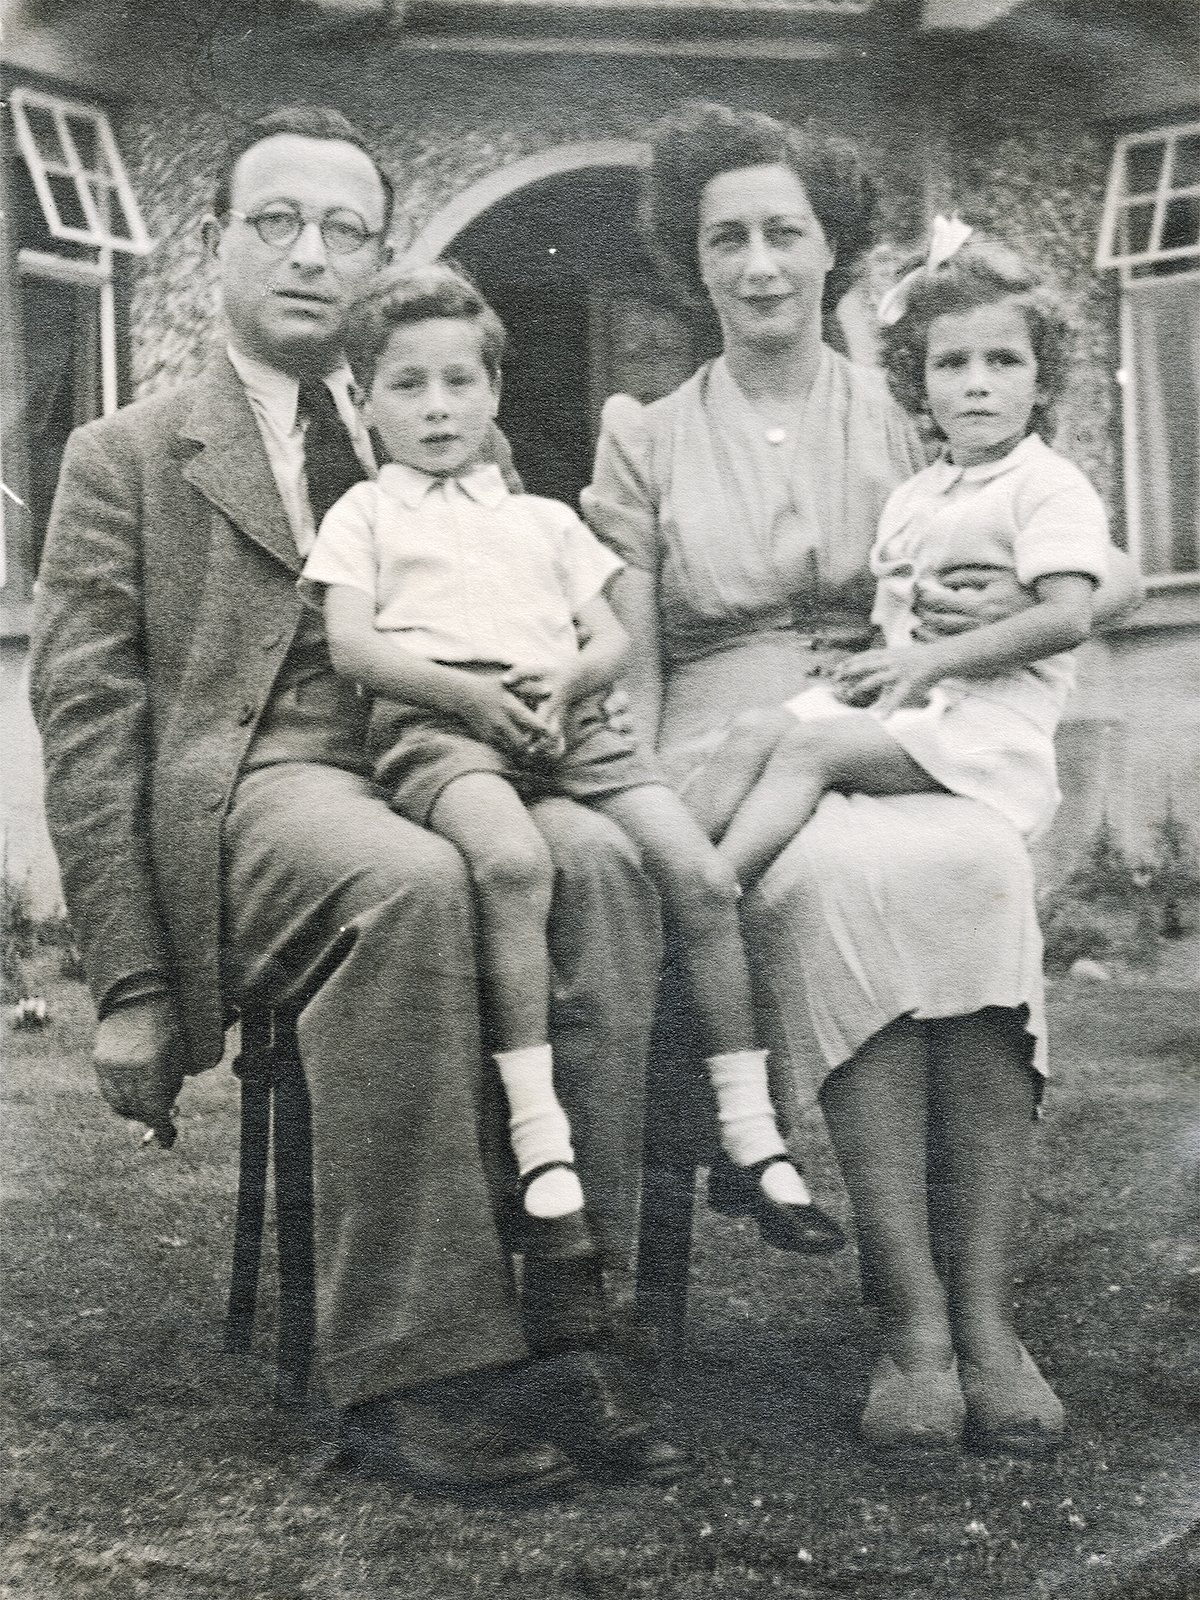 Hyman, Alan, Frieda (Cherrick) and Lila Shaper, outside their home in Kenilworth Square, Dublin, c. 1948.